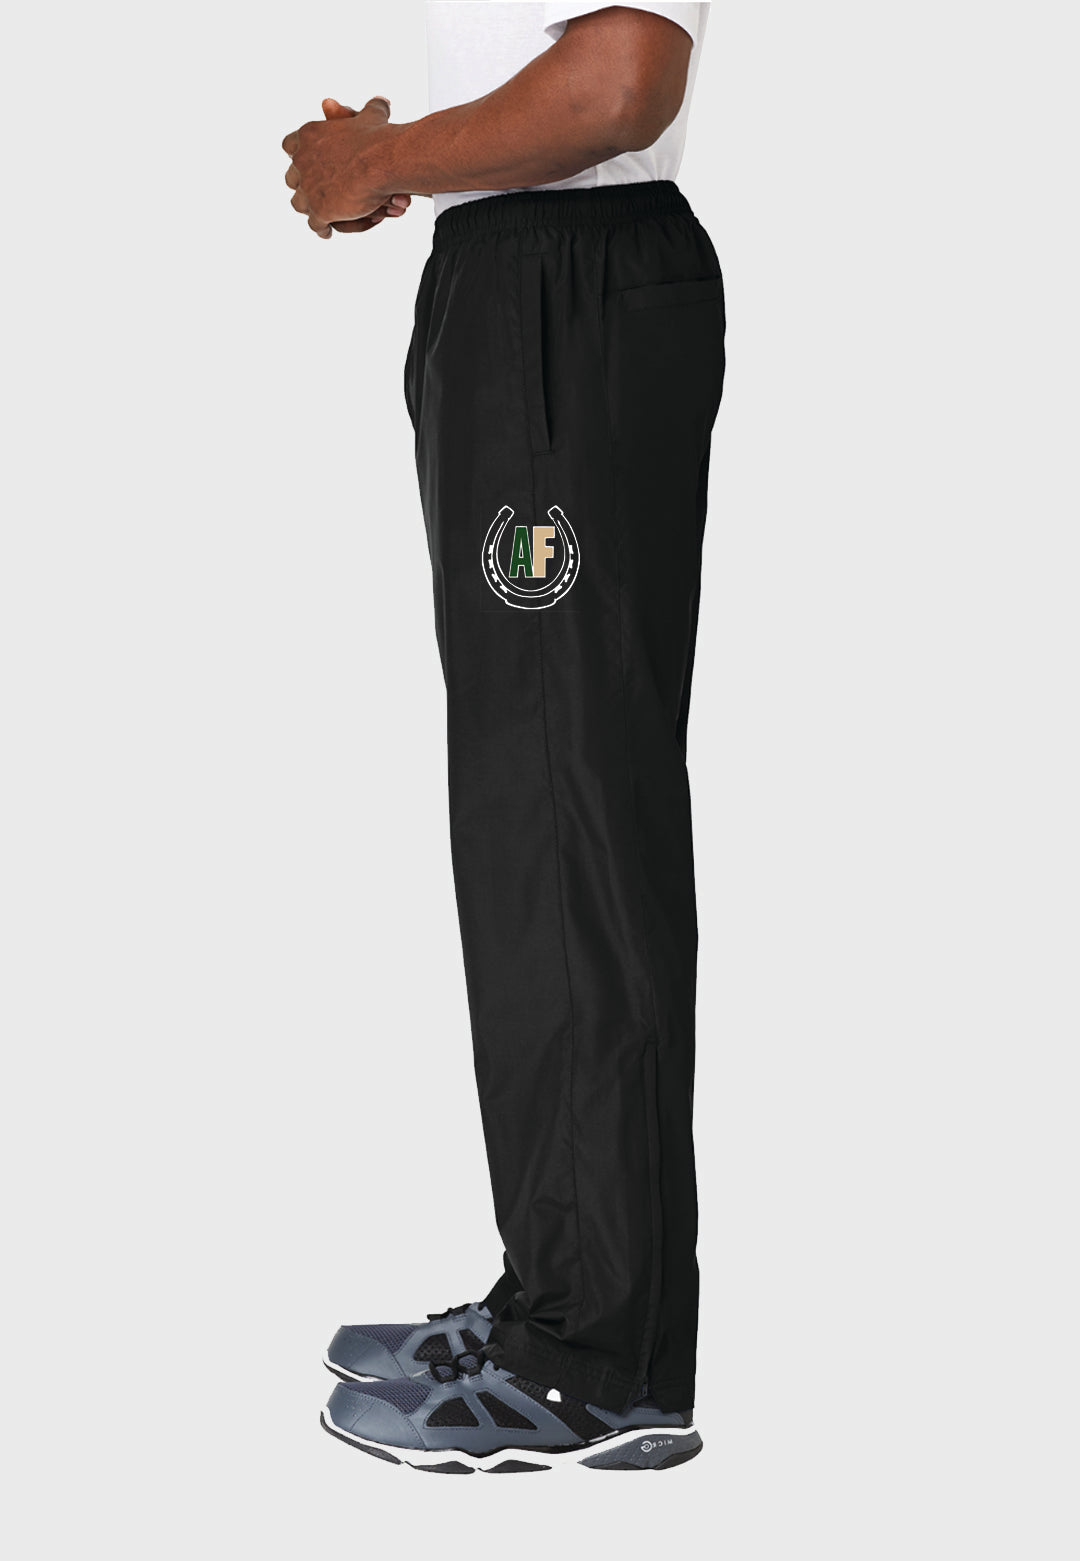 Amblefoot Farms Sport-Tek® Black Pull-On Wind Pant (Unisex) - Adult + Youth Sizes